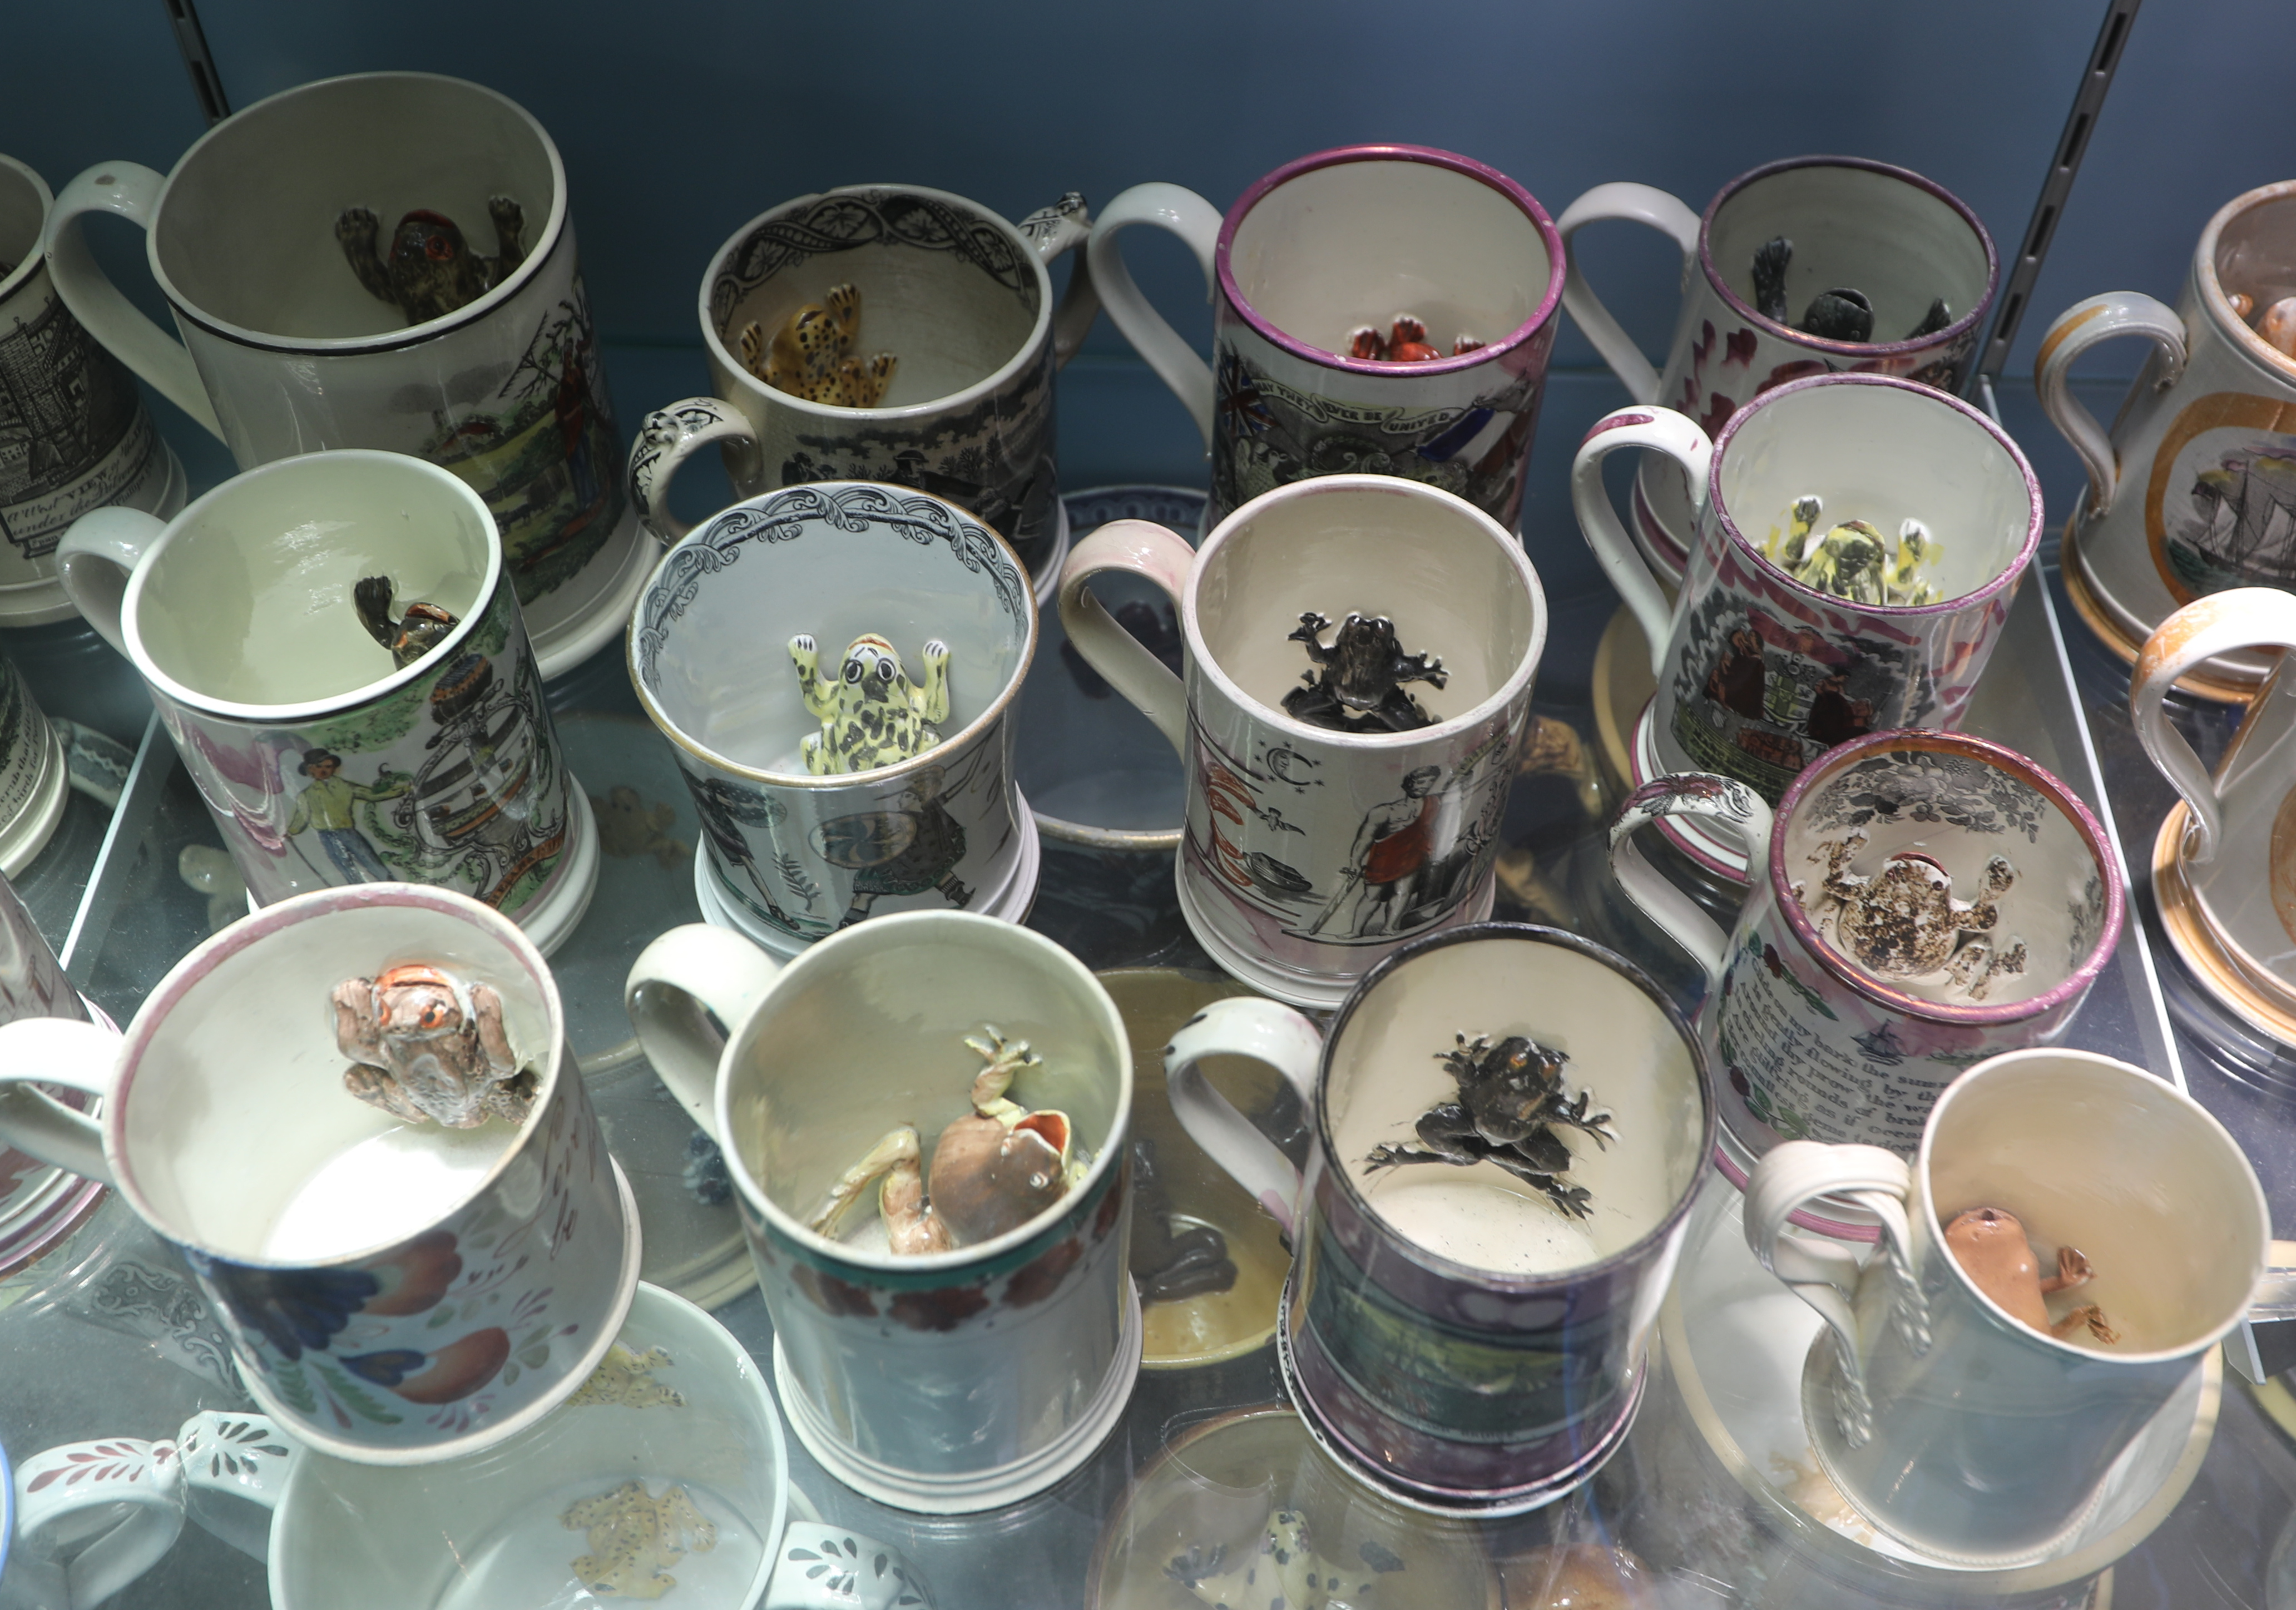 File:Set of frog mugs.jpg - Wikipedia